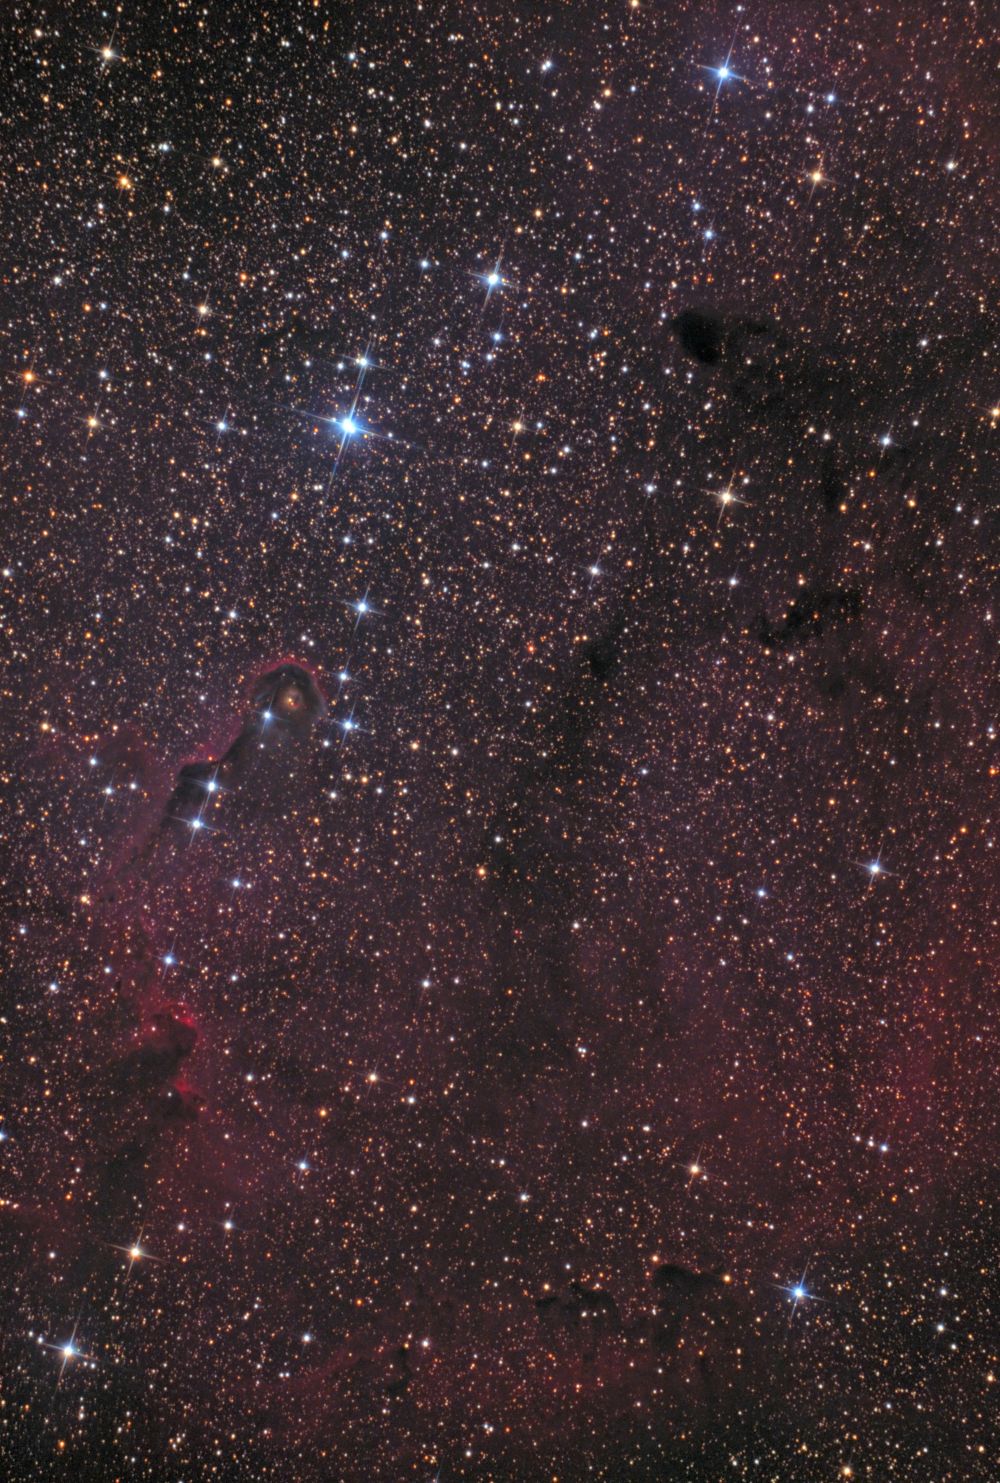 IC 1396, IC 1396A ("Туманность Хобот слона"), VdB 142, B 161